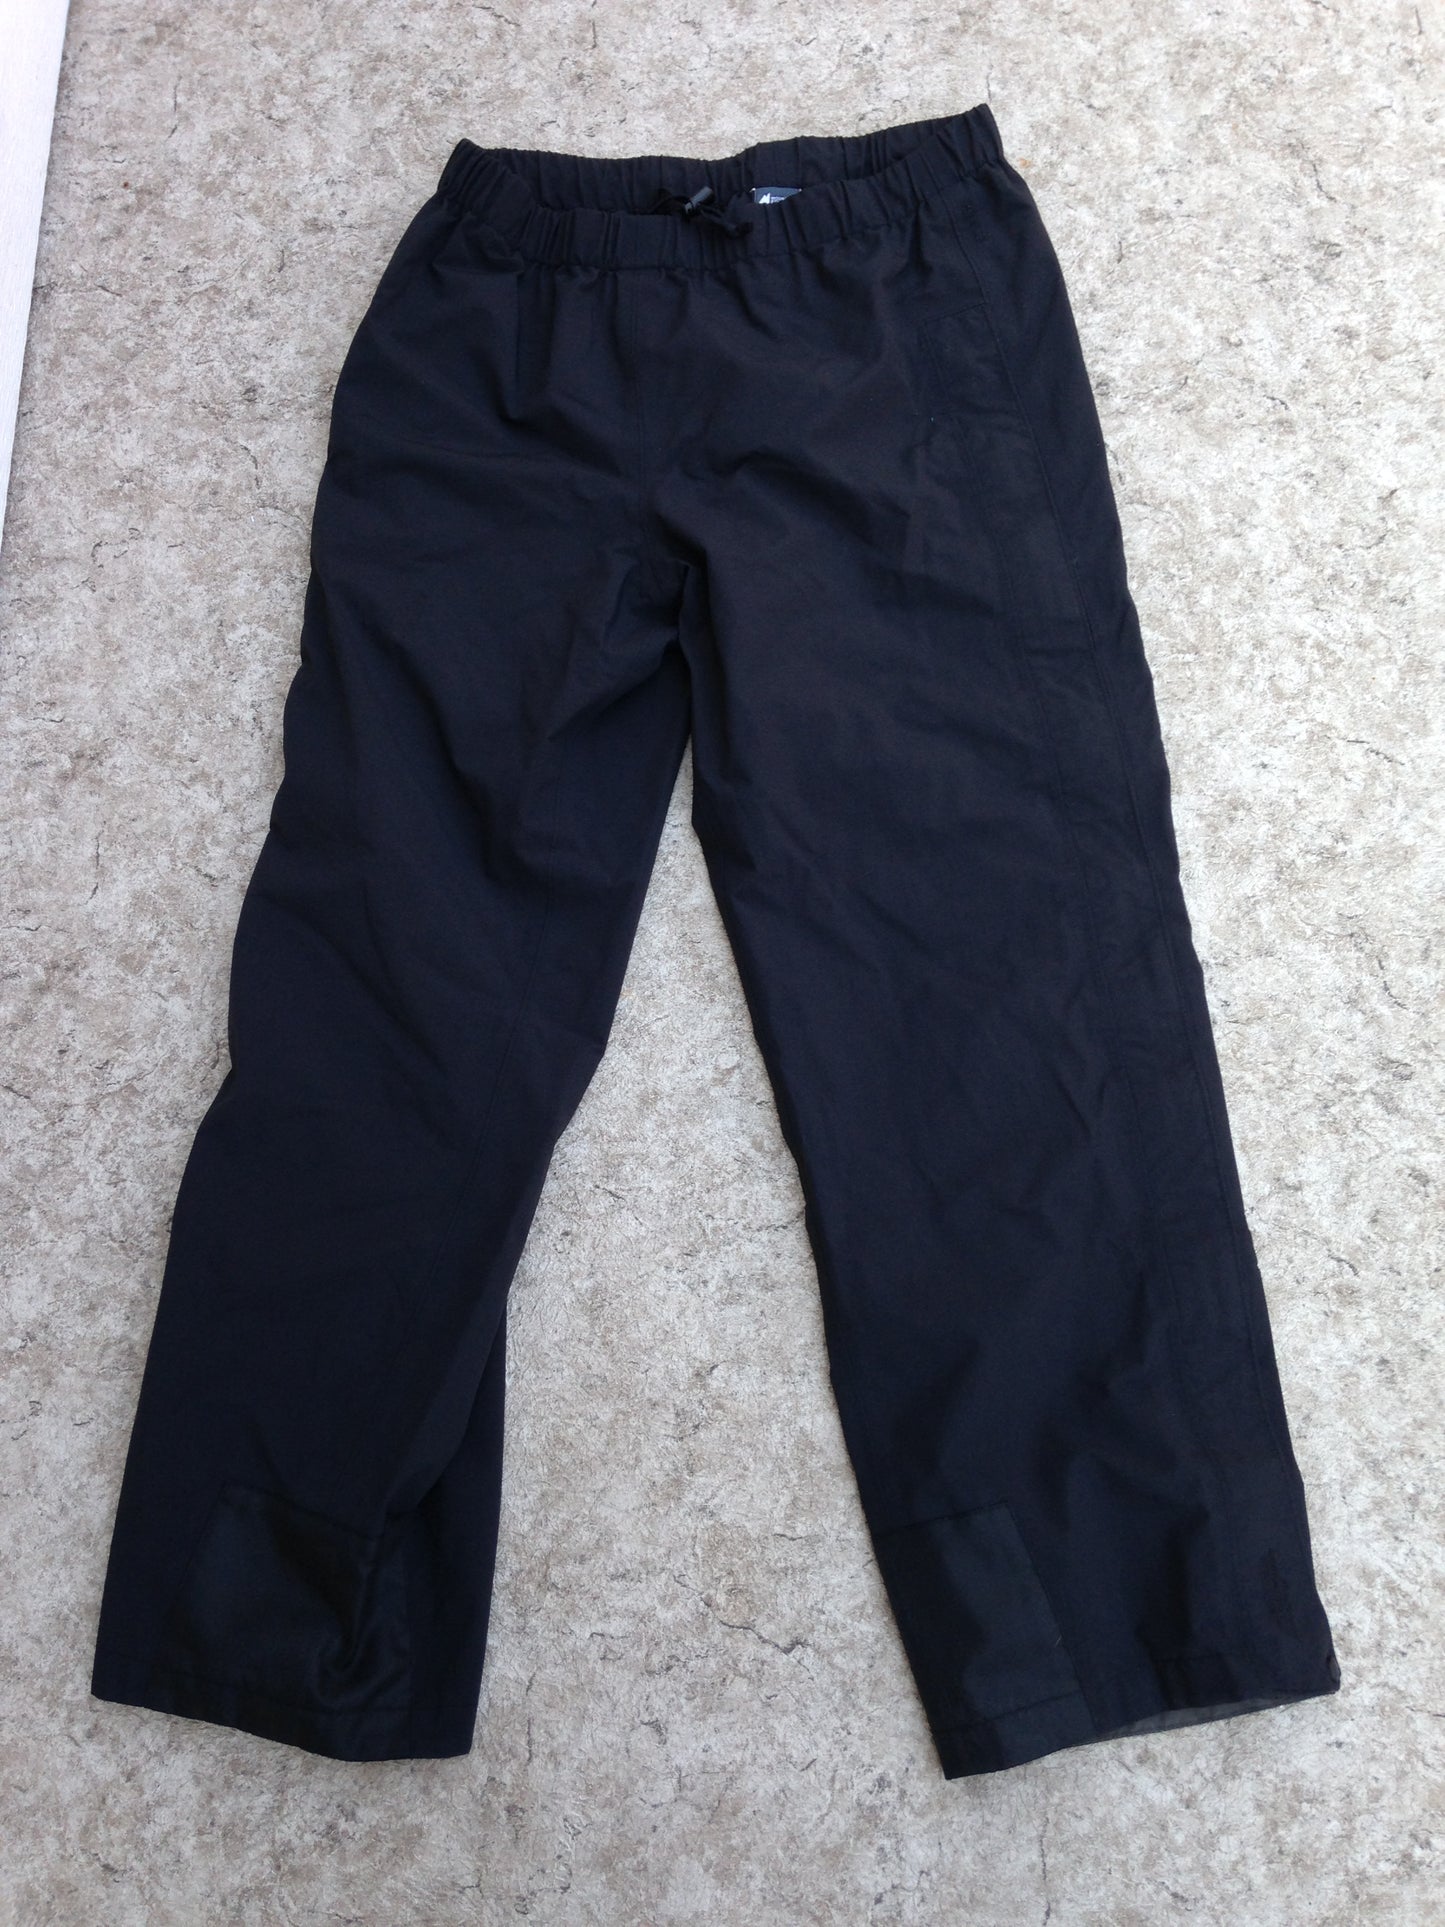 Rain Pants Men's Size Large  MEC Gore-Tex  Black Waterproof Full Zippers Up Both Legs Excellent